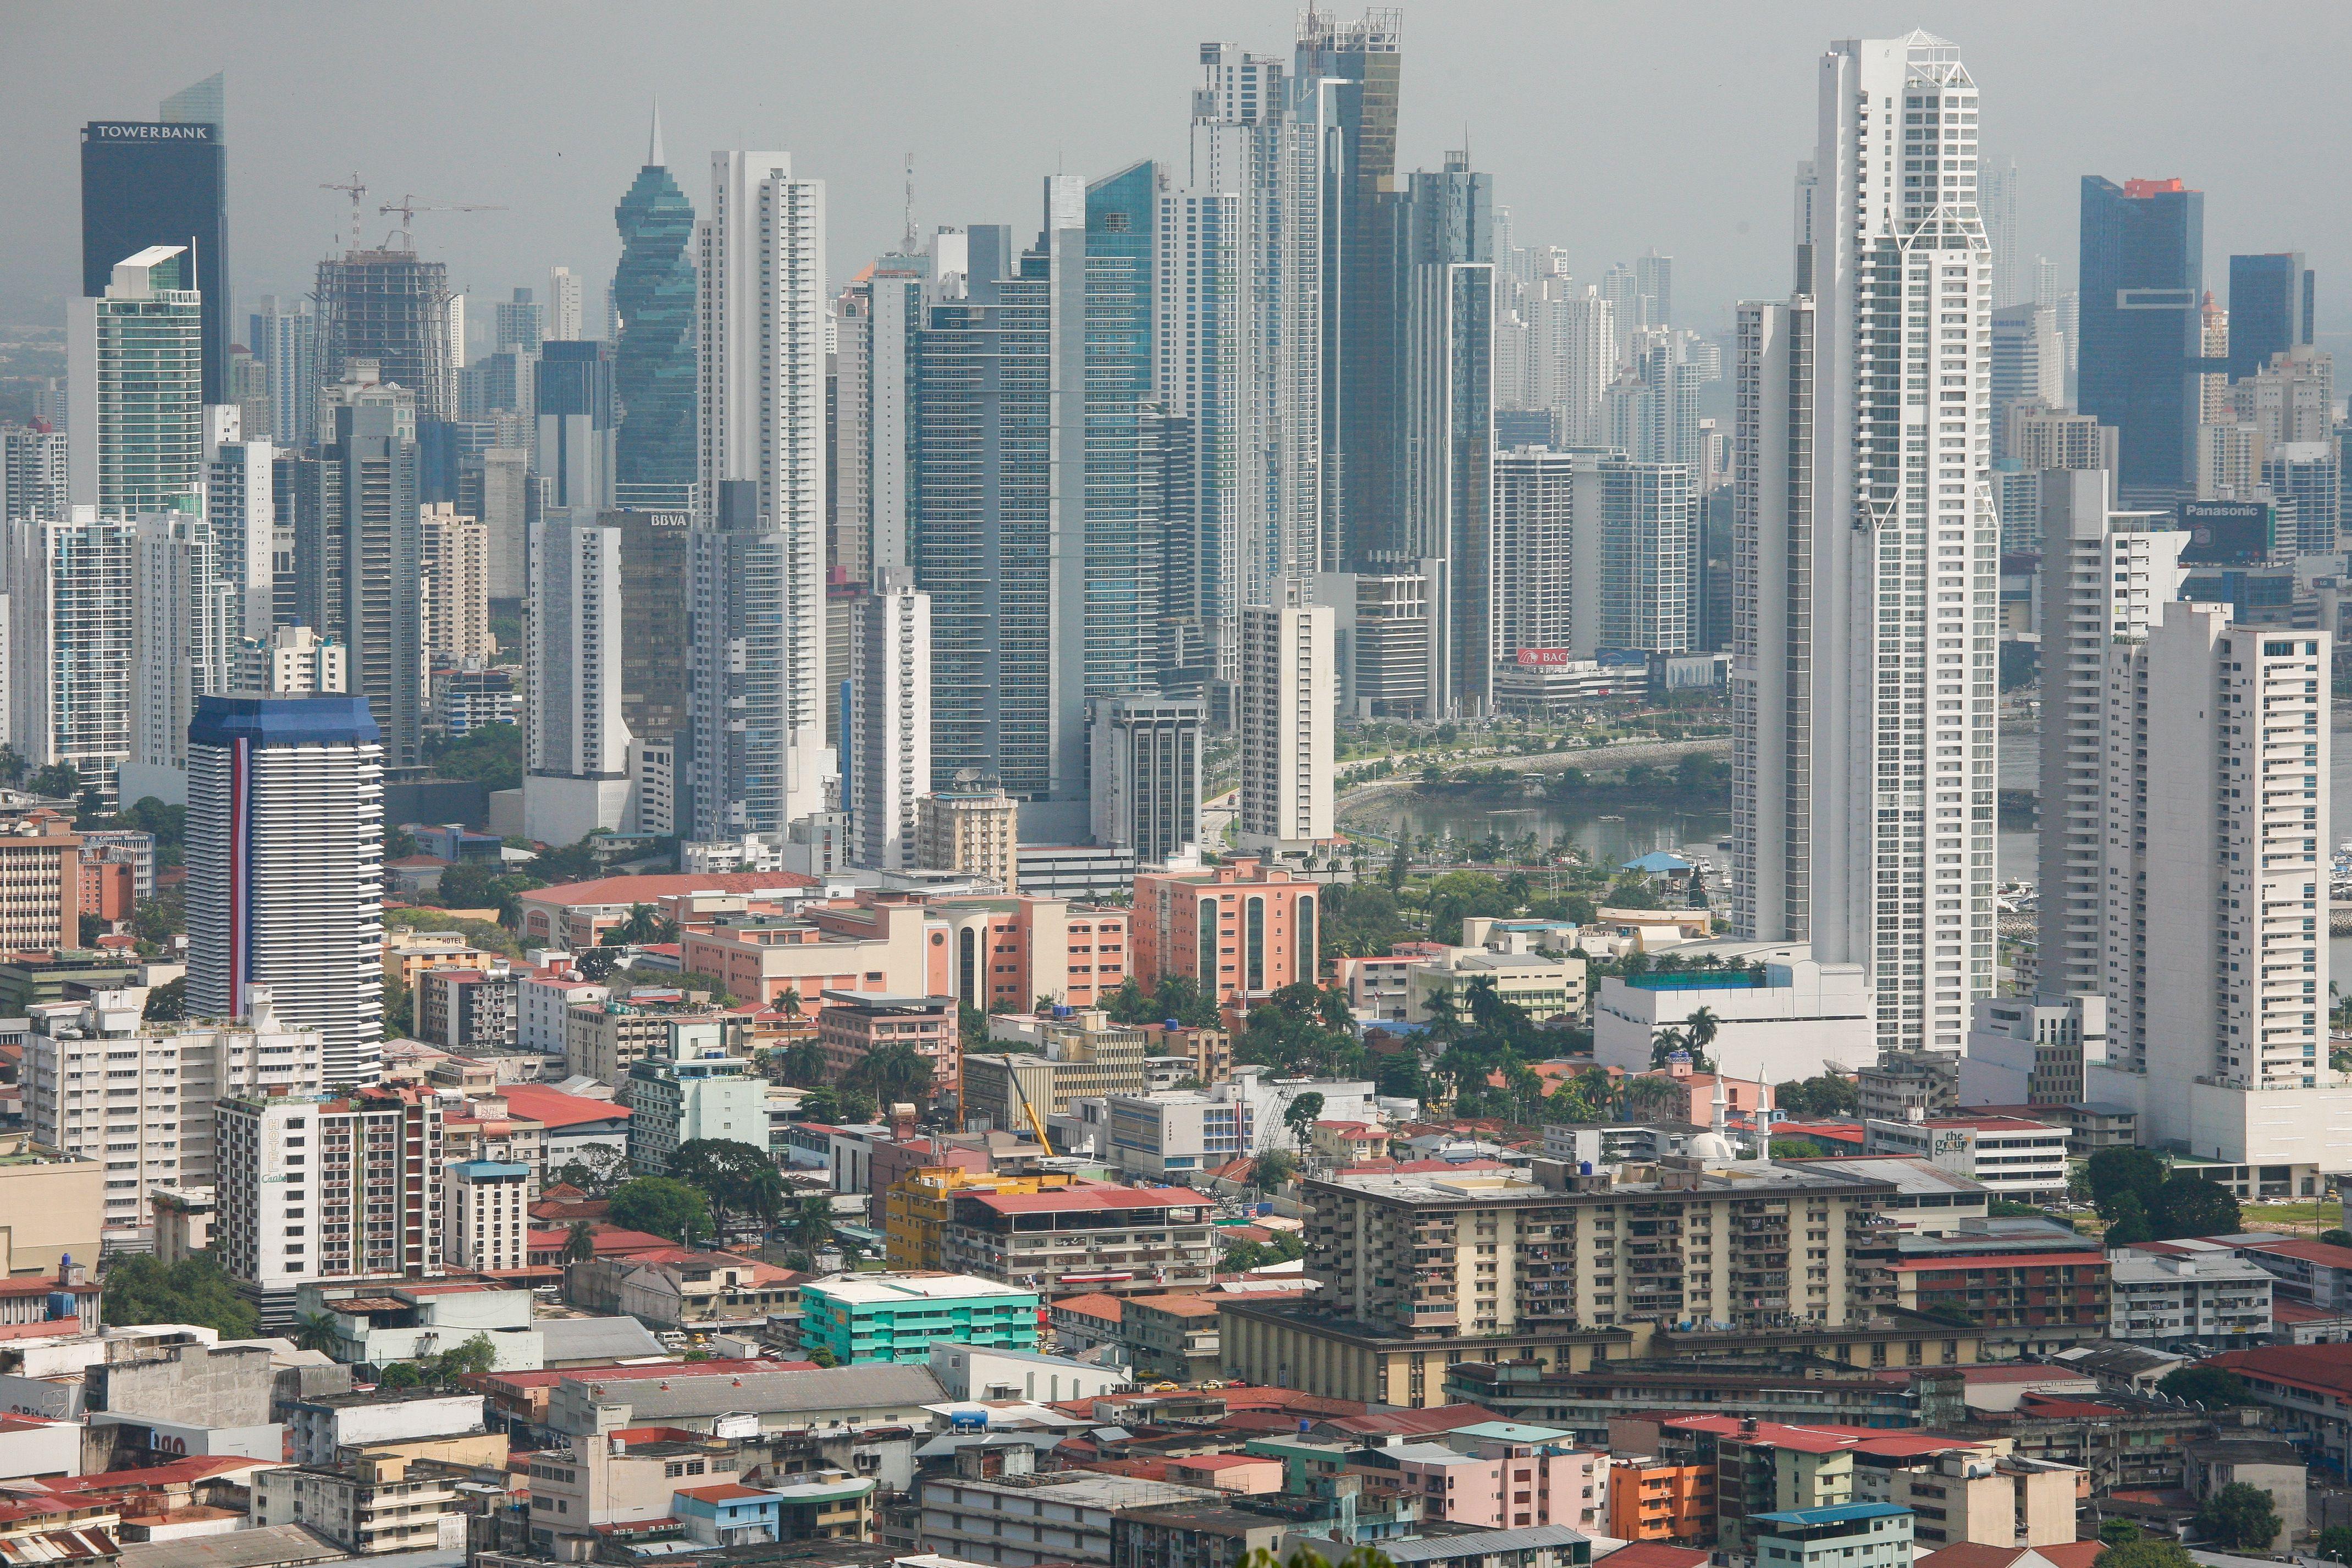 Panama City 4k Ultra HD Wallpaper and Background Imagex2852